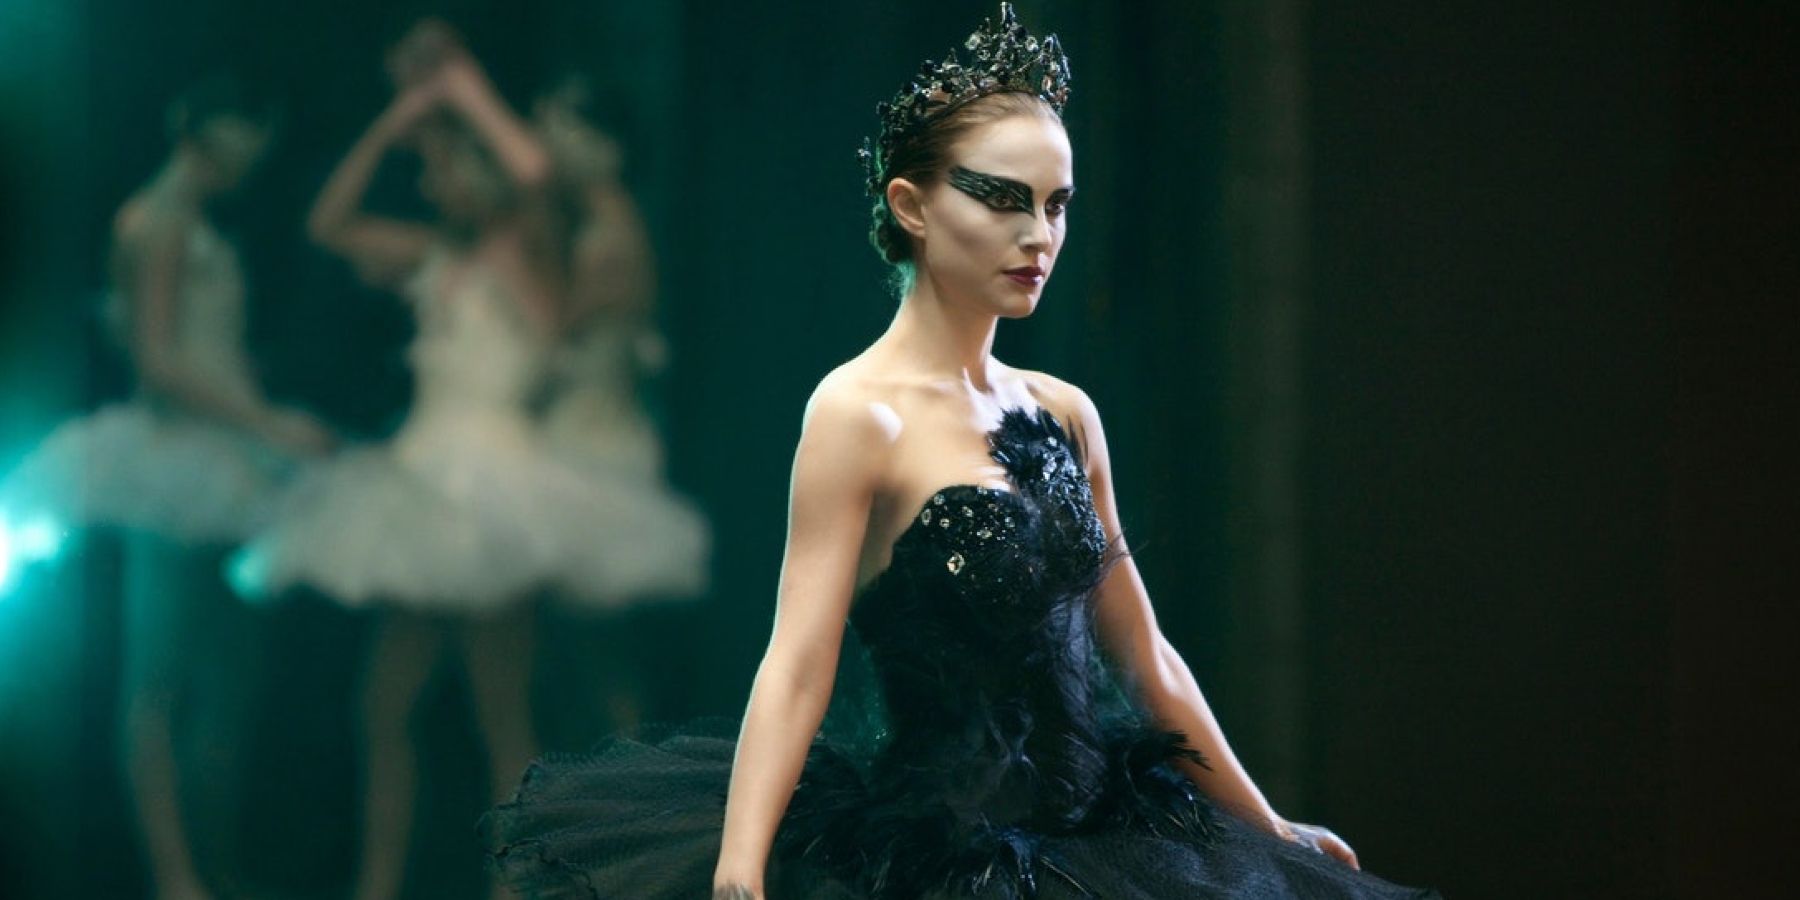 Natalie Portman dressed up in a black tutu in Black Swan